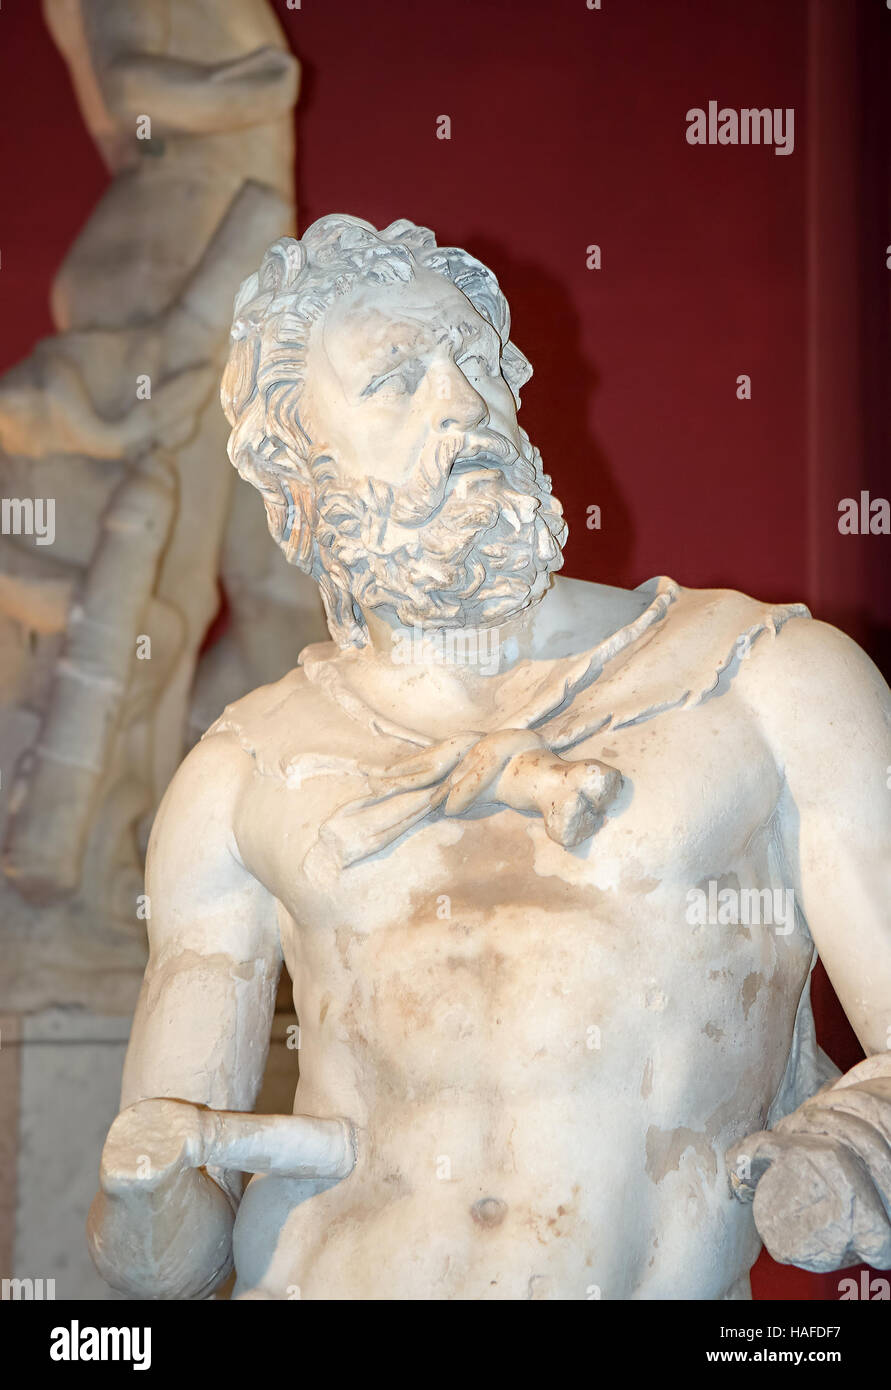 26.09.2009  Statue of Roman marble statue. Jamahiriya museum, Green Square, Tripoli, Libya Stock Photo